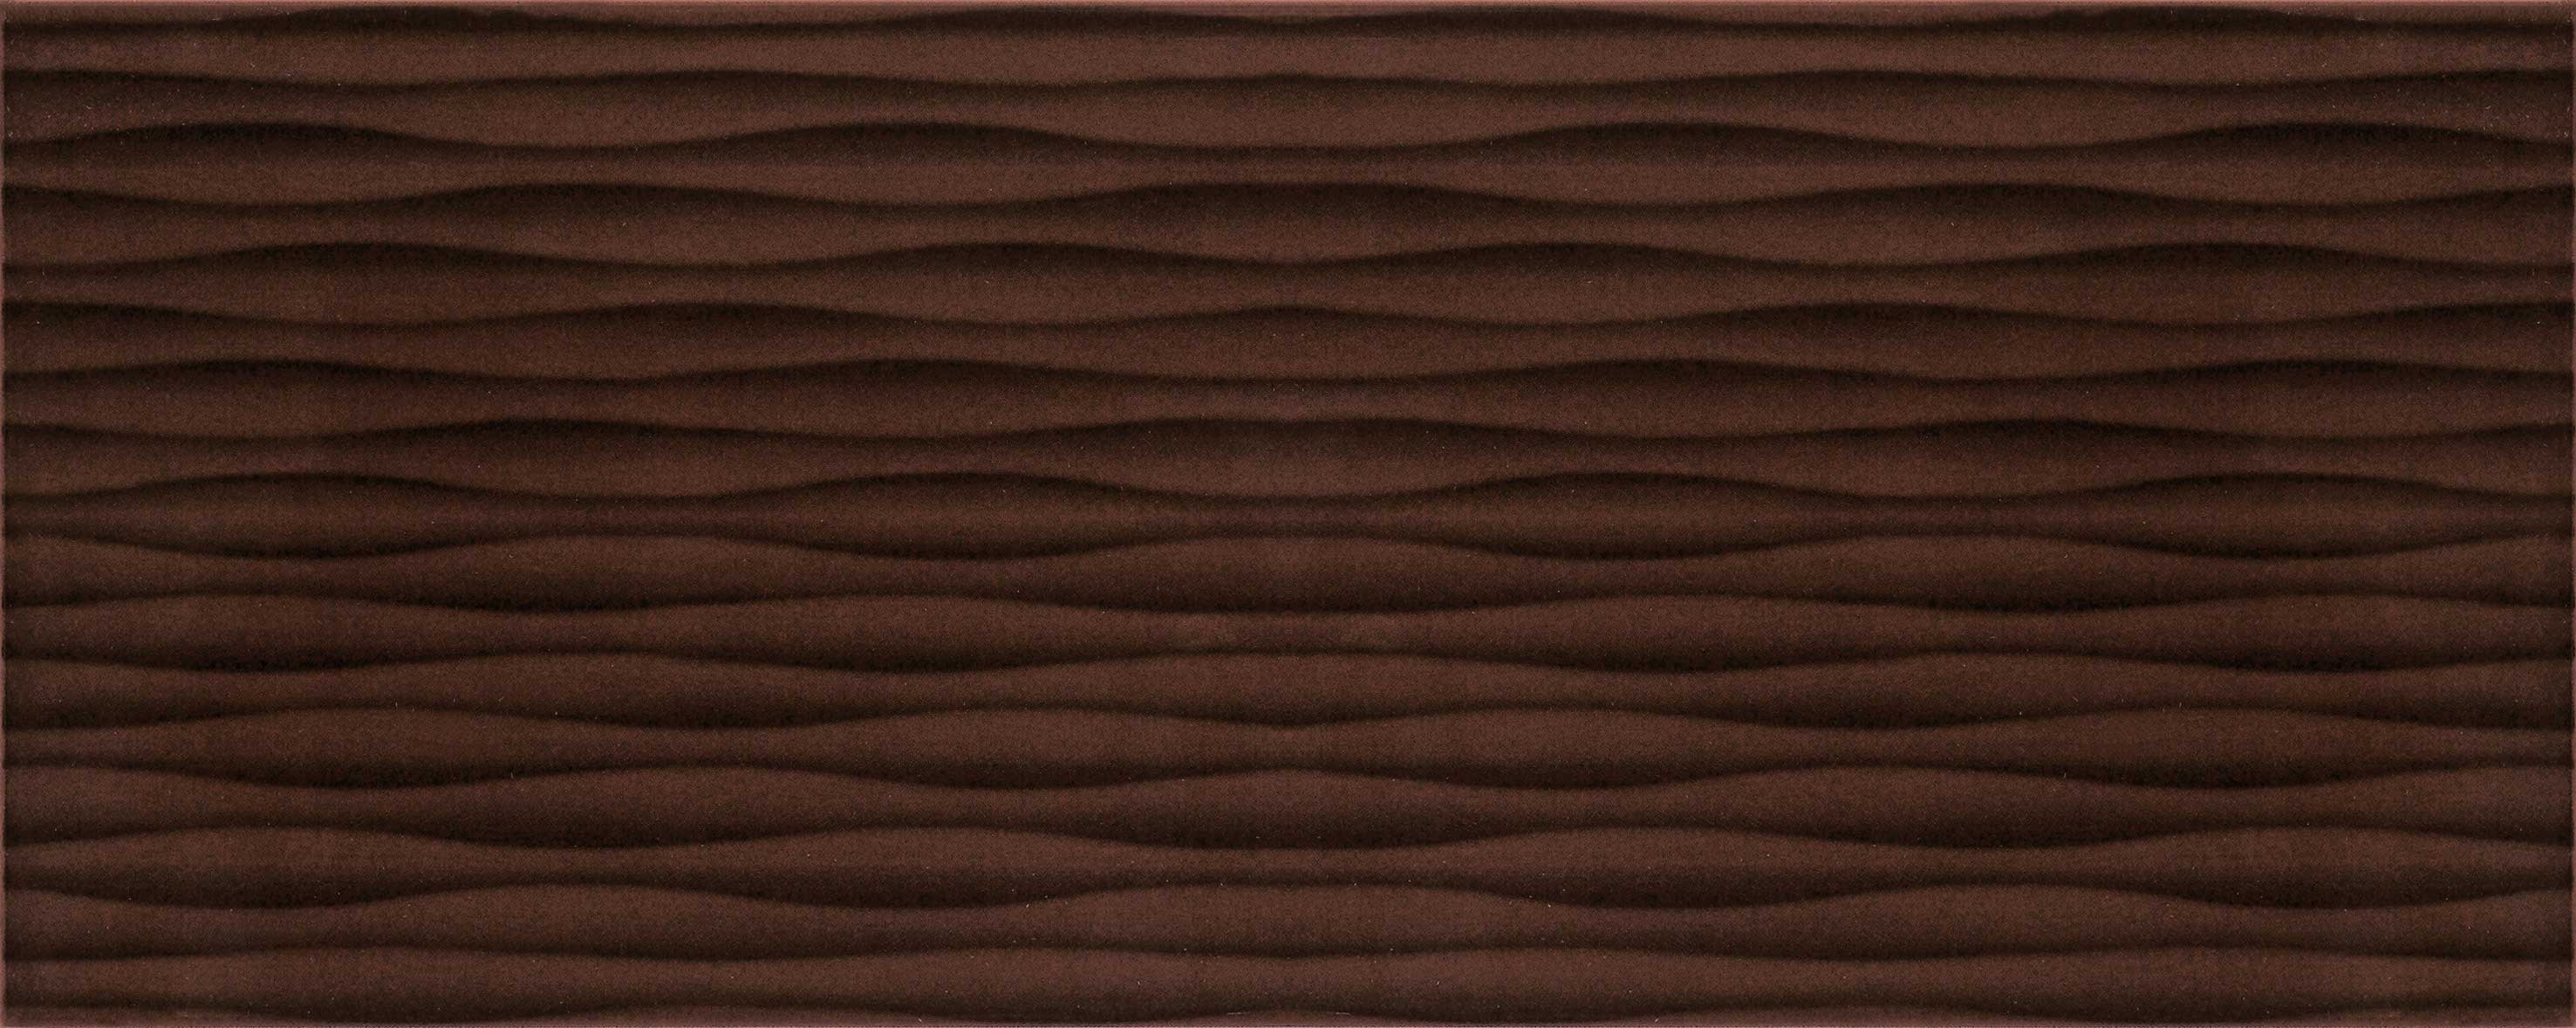 Royal Suite Chocolate 20,2x50,4 плитка настенная